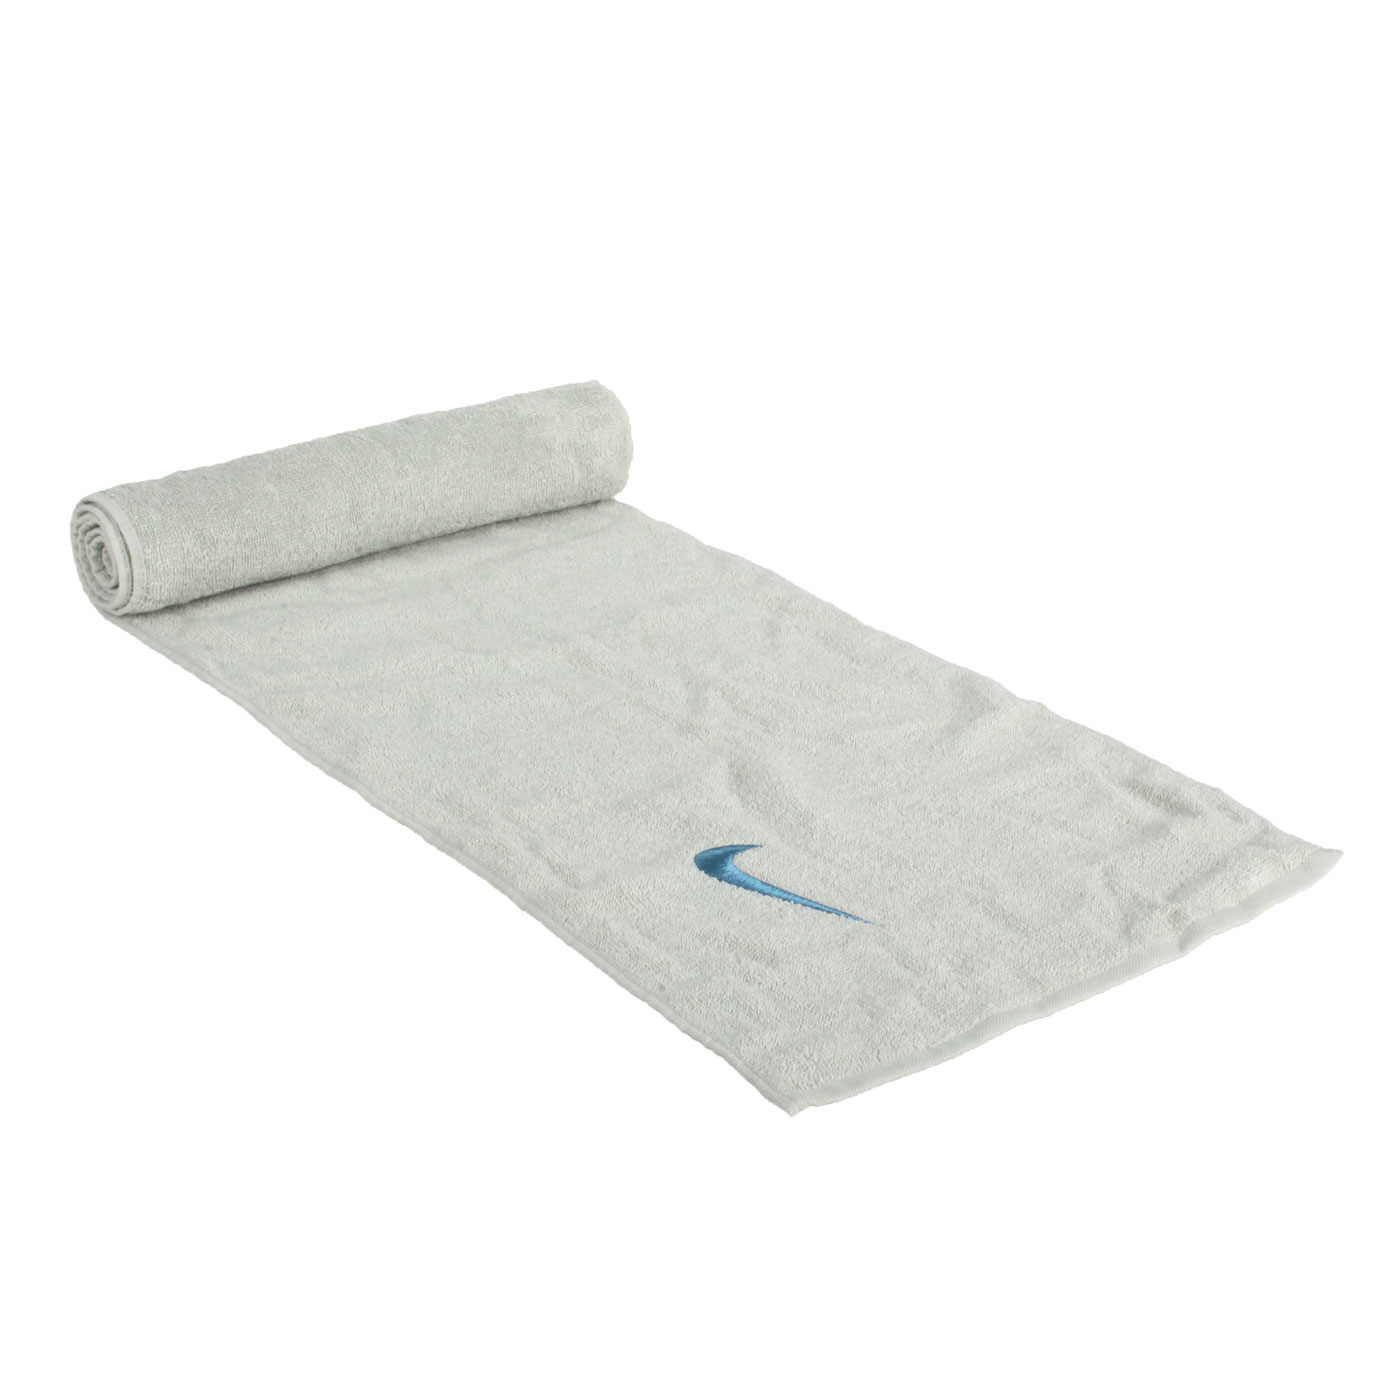 NIKE SOLID CORE 長型毛巾(120x25cm)  N1001540050NS